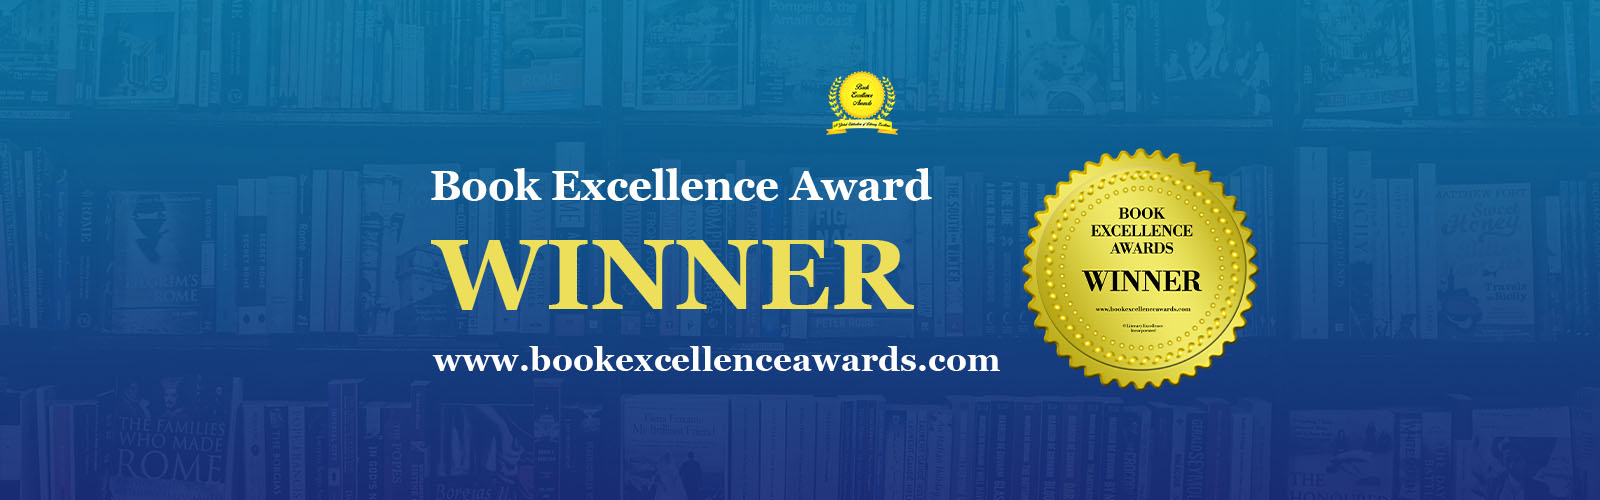 Book-Excellence-Award-Winner-Website-Hero-Image-1600x500